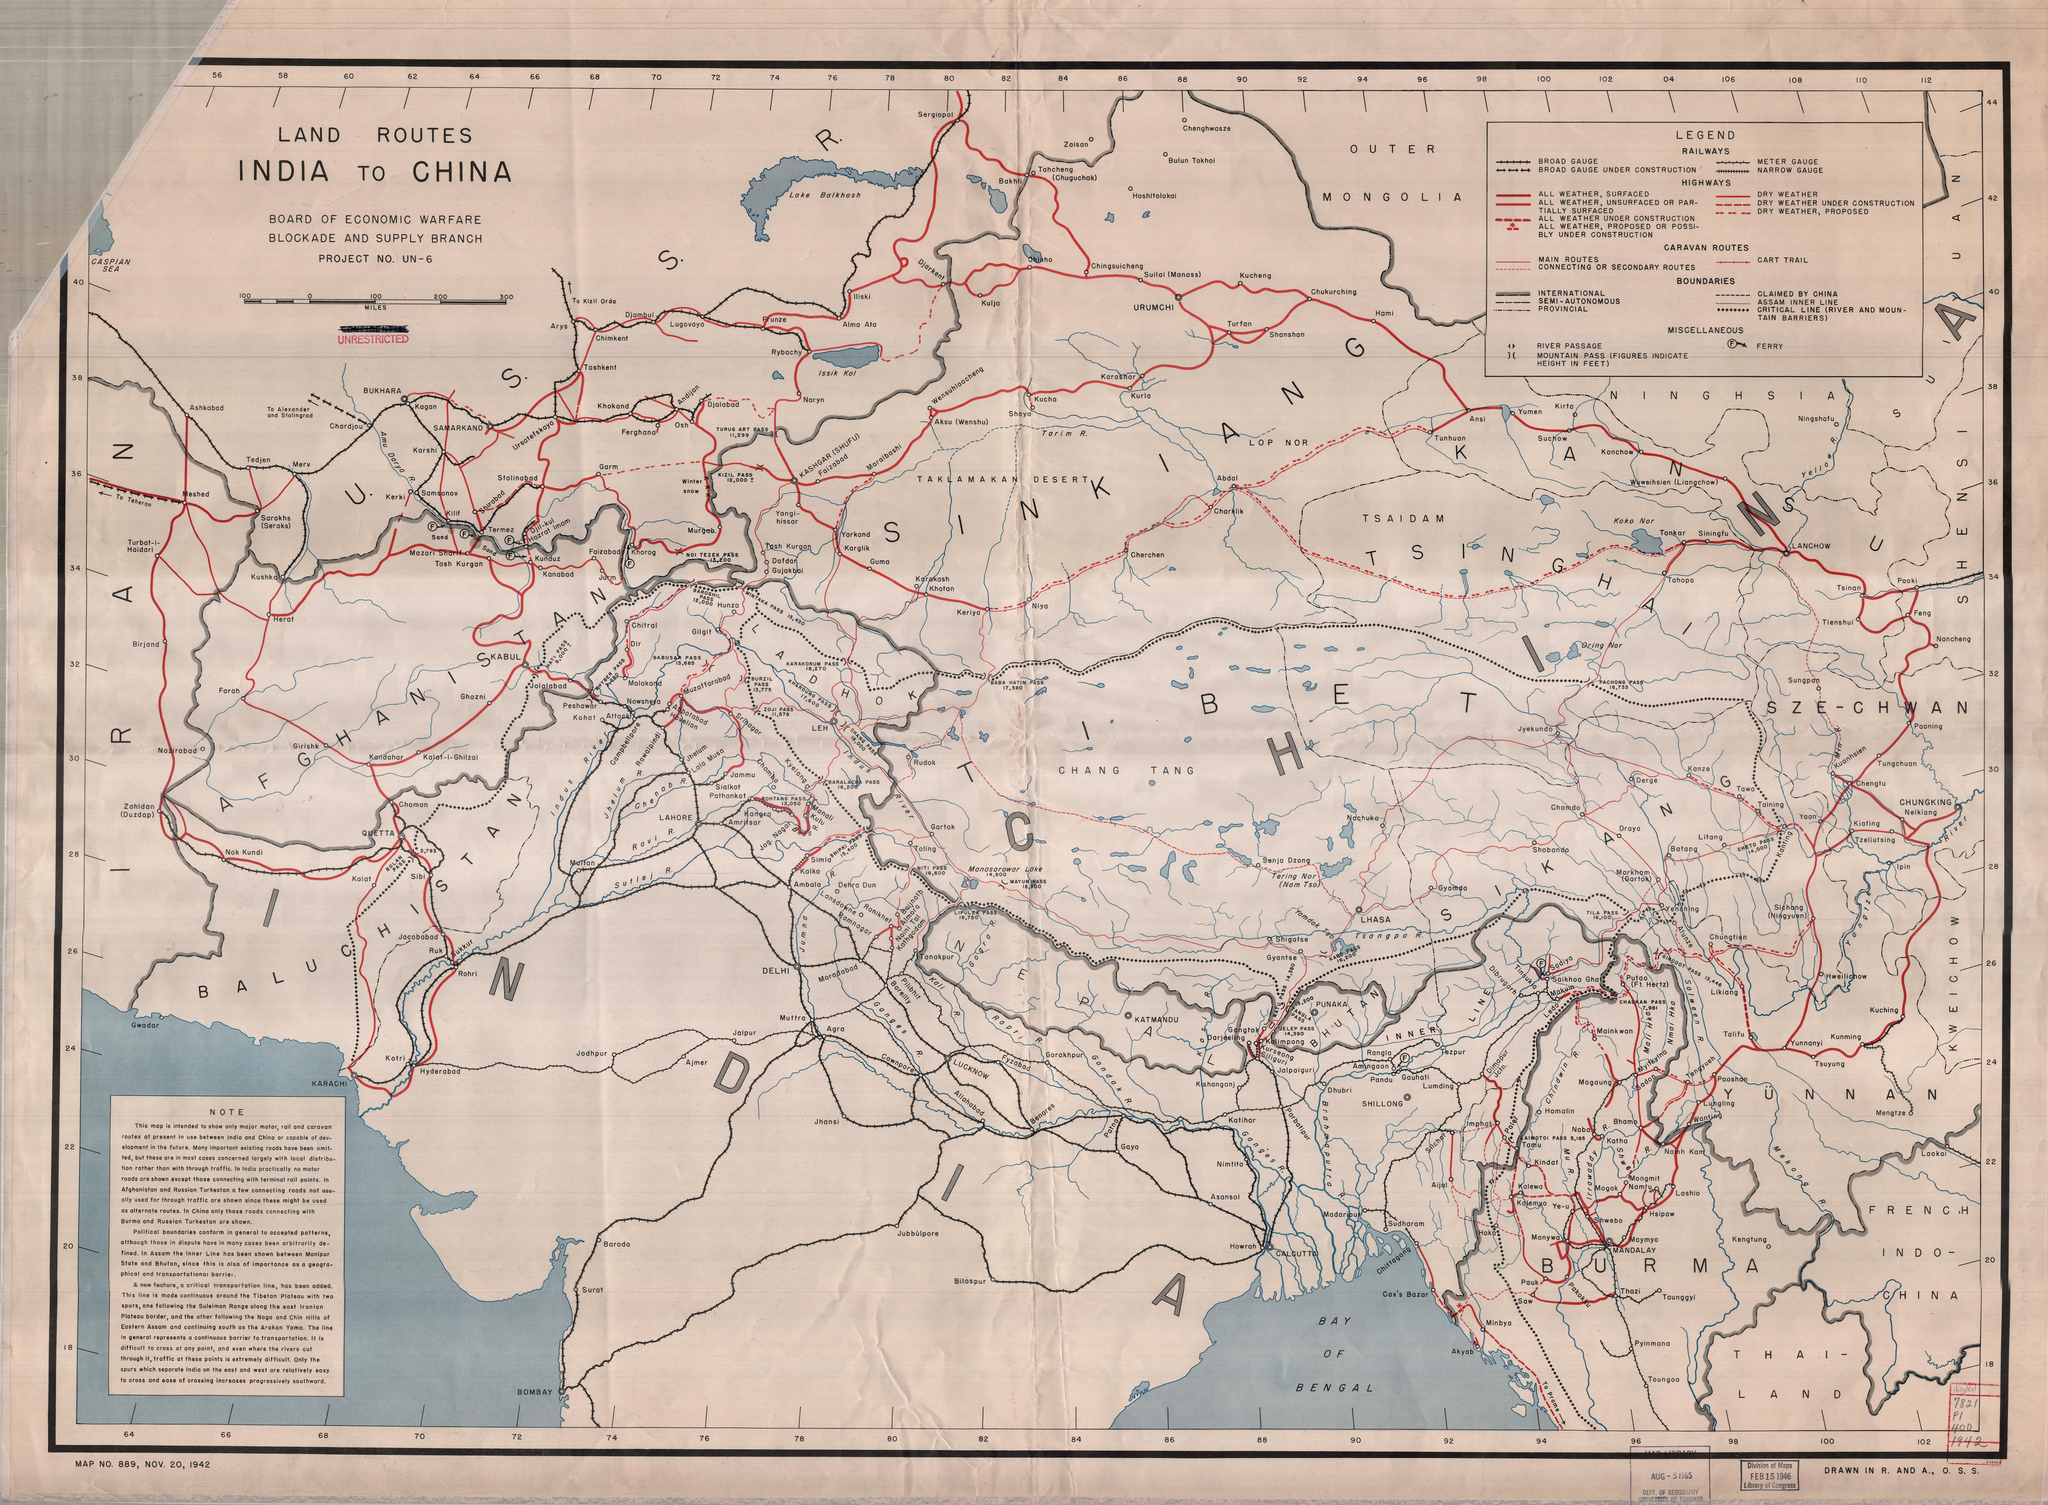 Land routes india to china2048